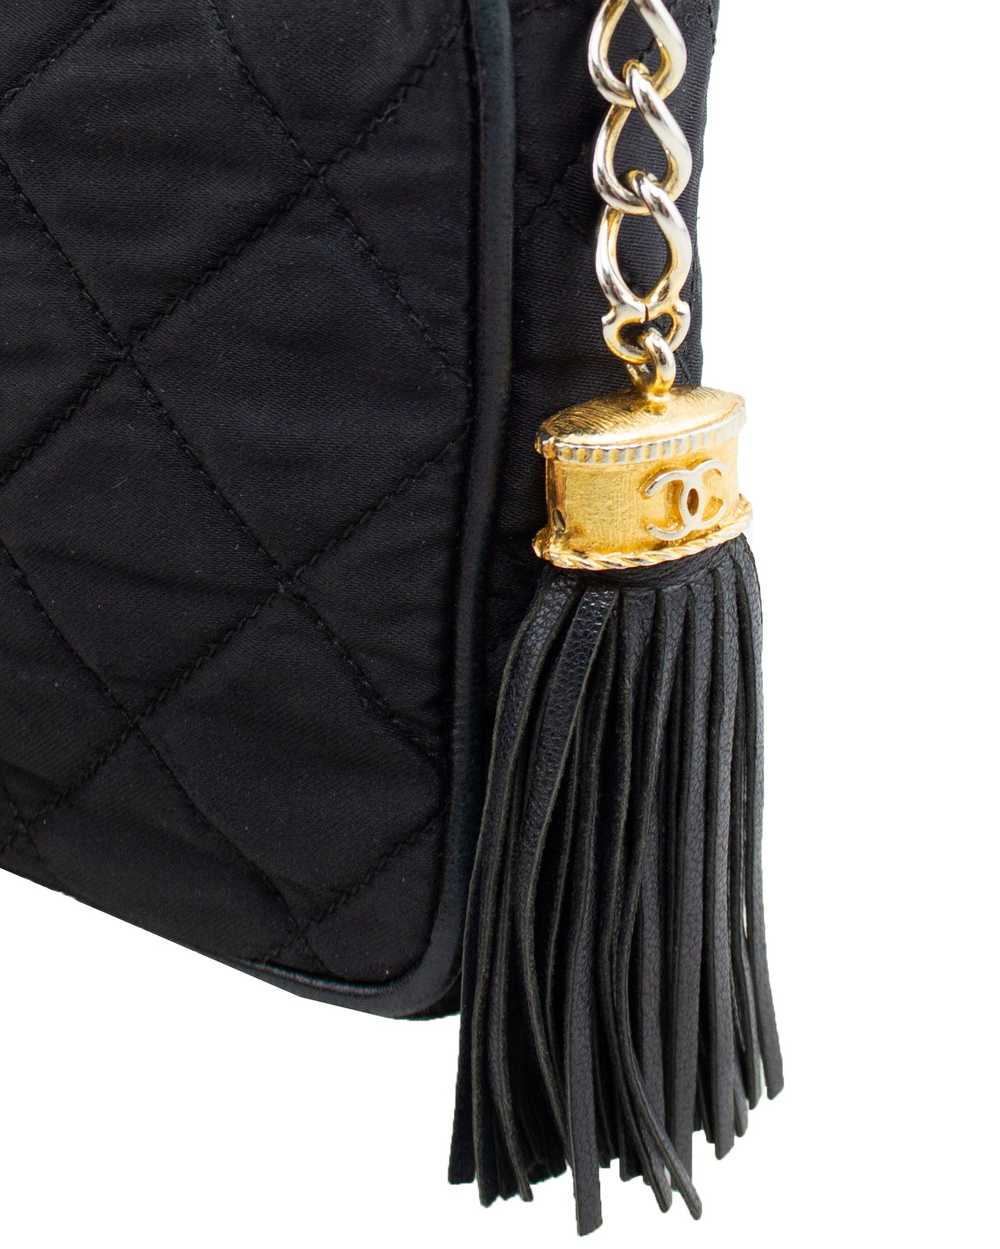 Chanel Black Satin Quilted Evening Bag - image 3